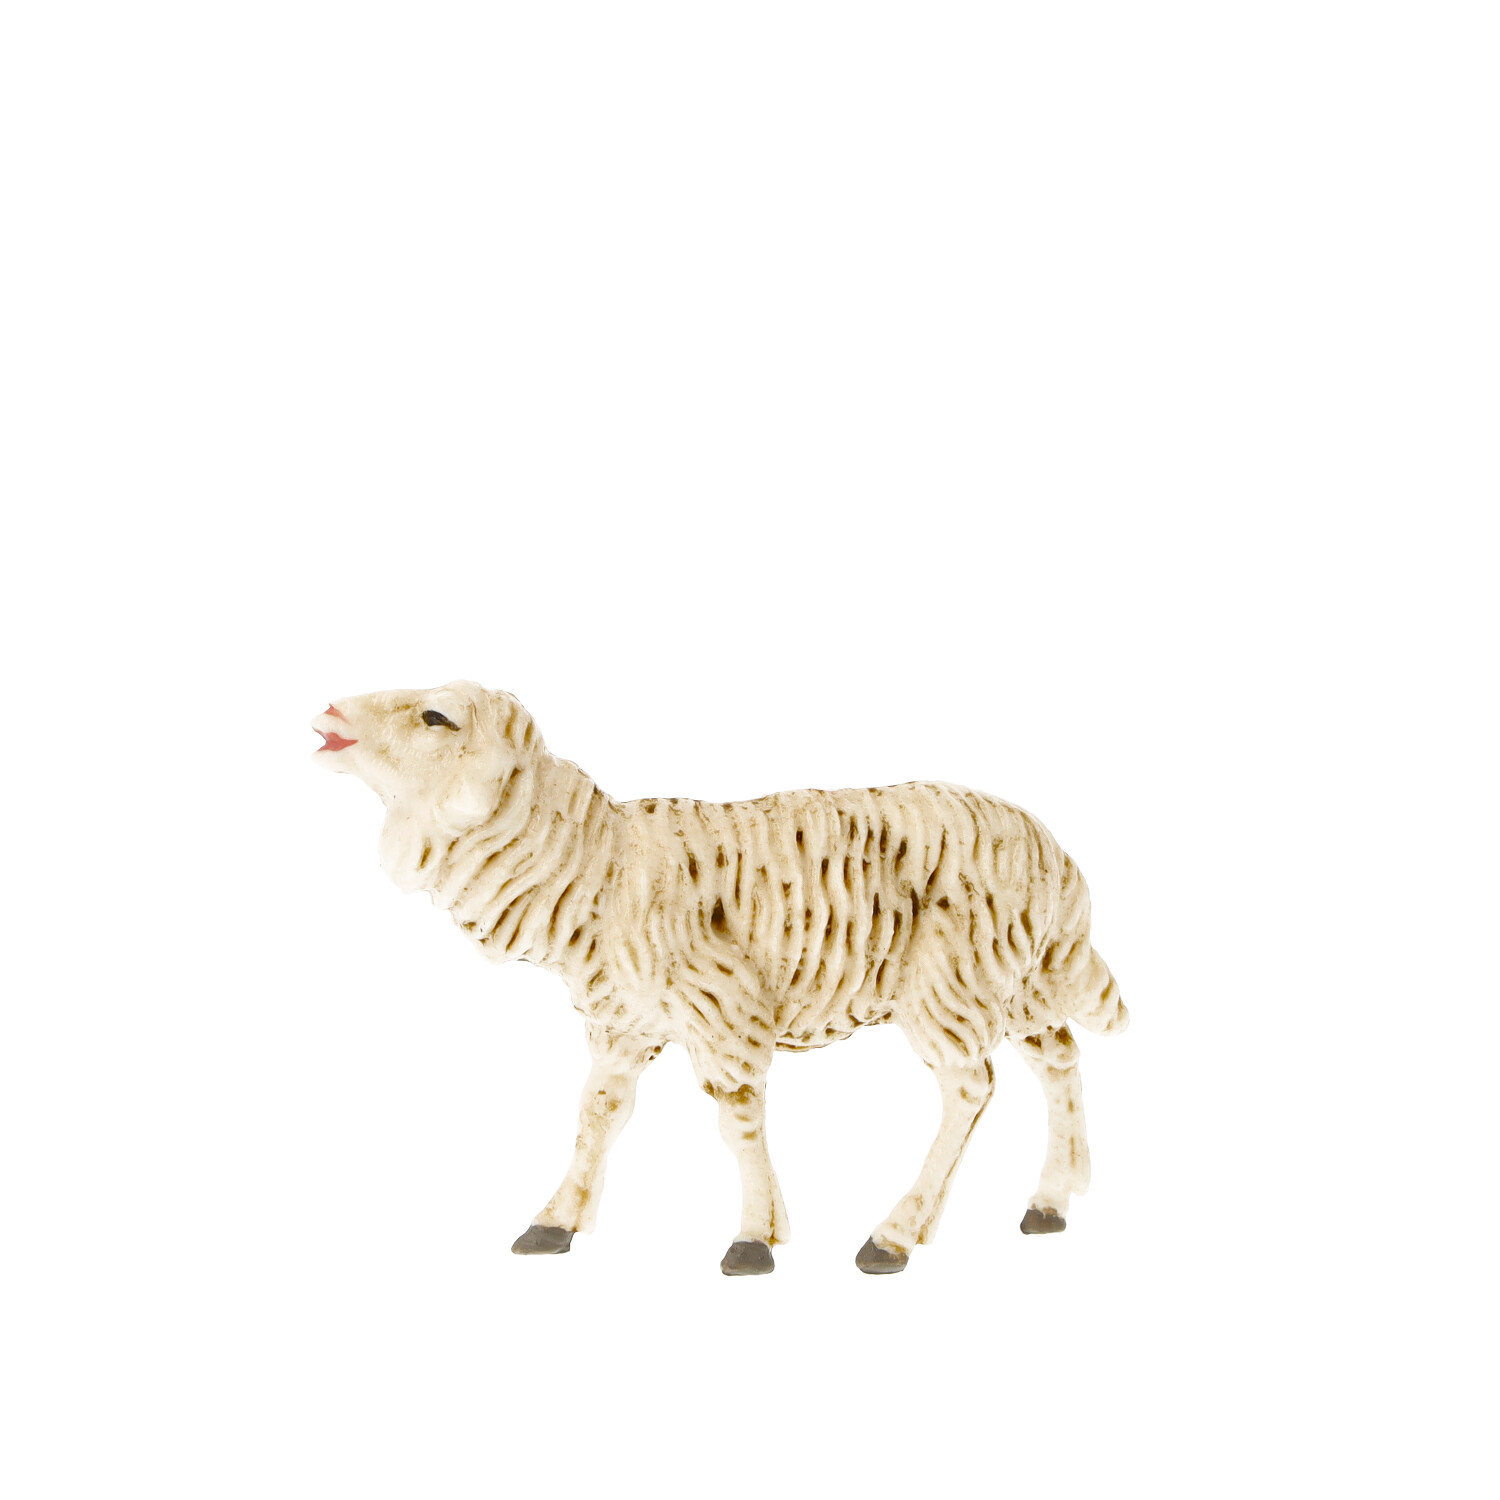 Bleeting sheep - Marolin Plastik - Resin Nativity figure - made in Germany